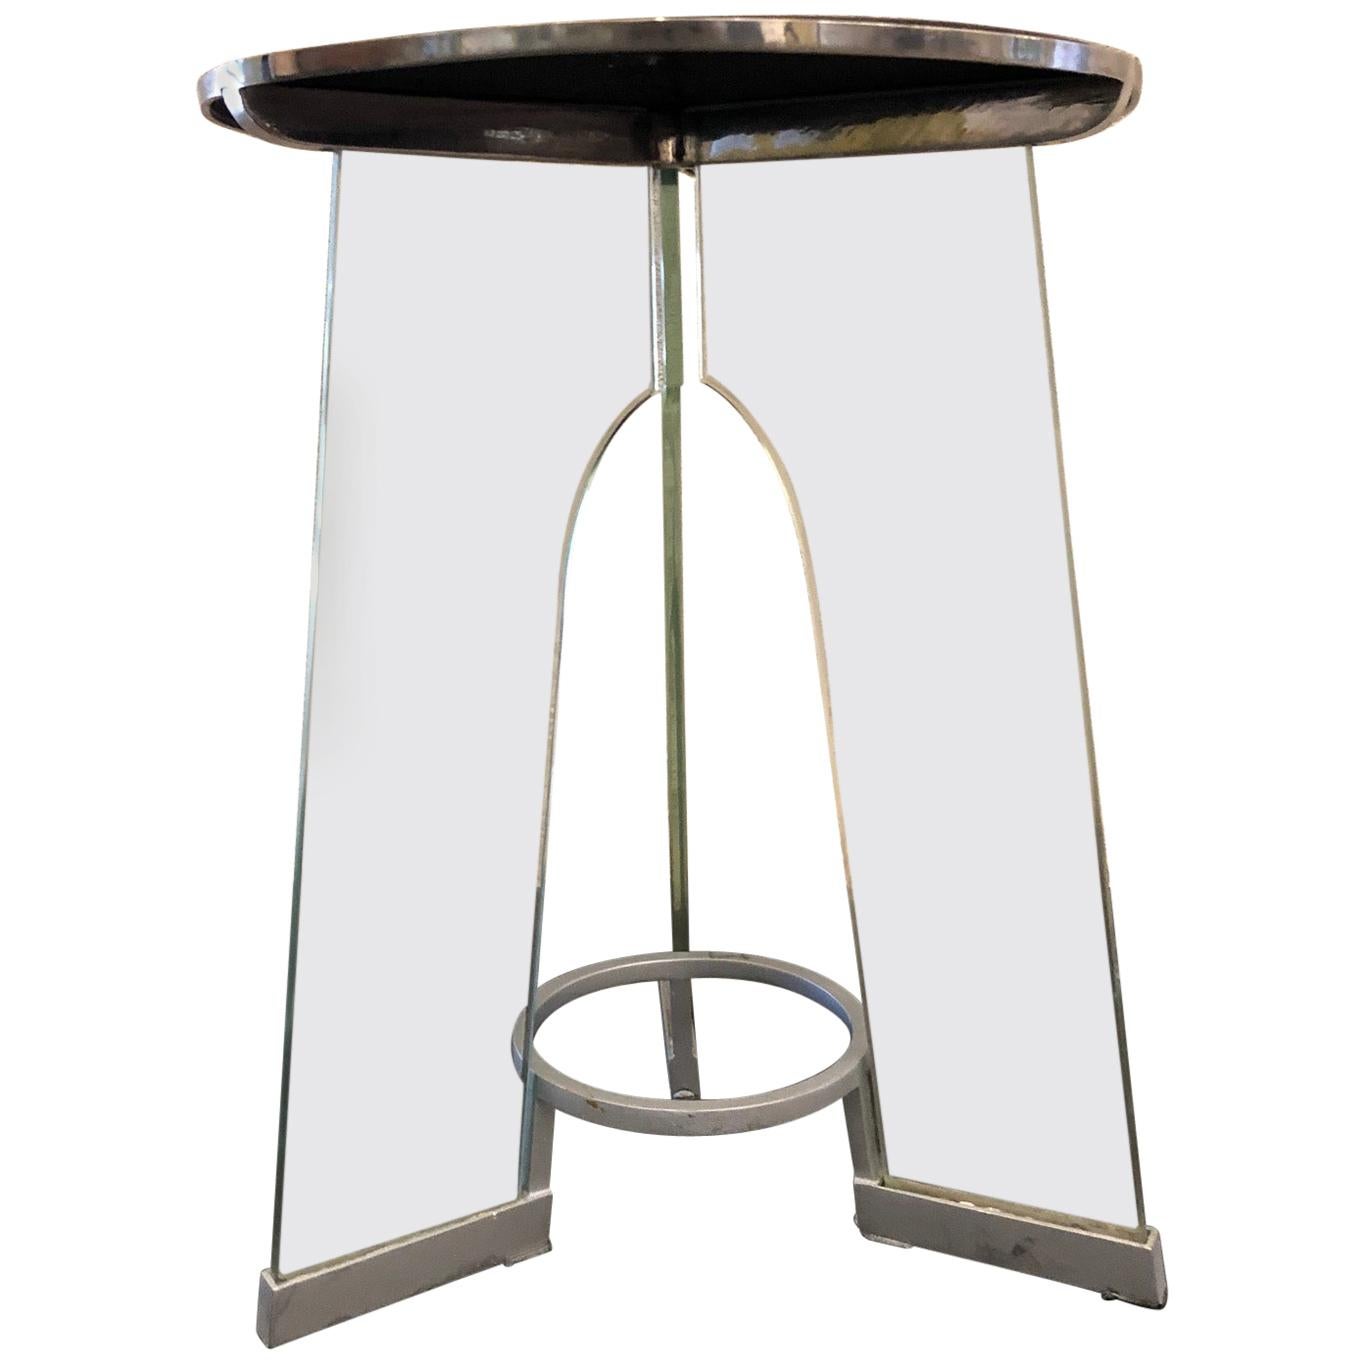 Gio Ponti Black Vitrolite Tempered Glass Occasional Table for Fontana Arte, 1932 For Sale